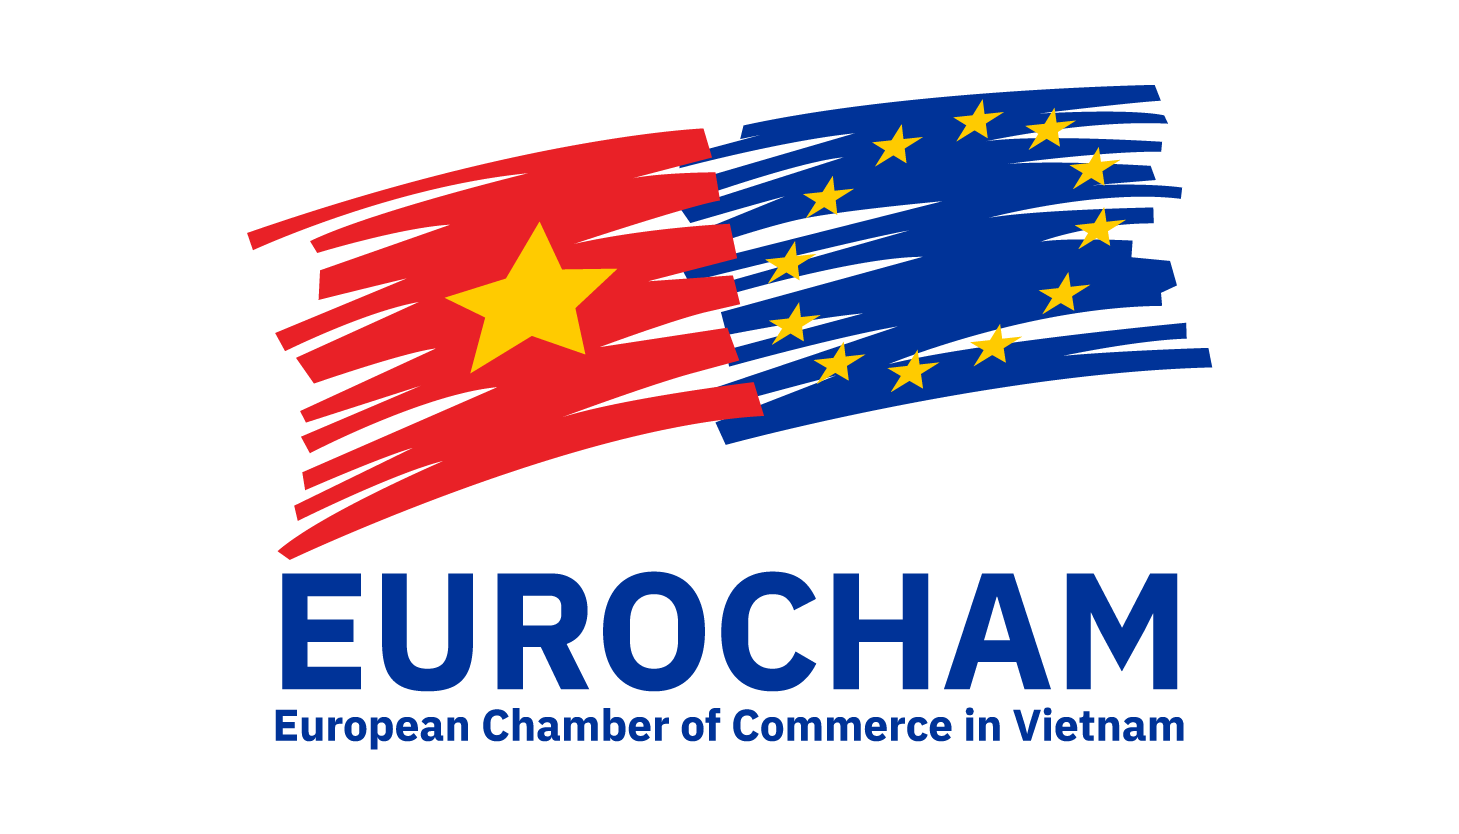 EuroCham Event in Hanoi